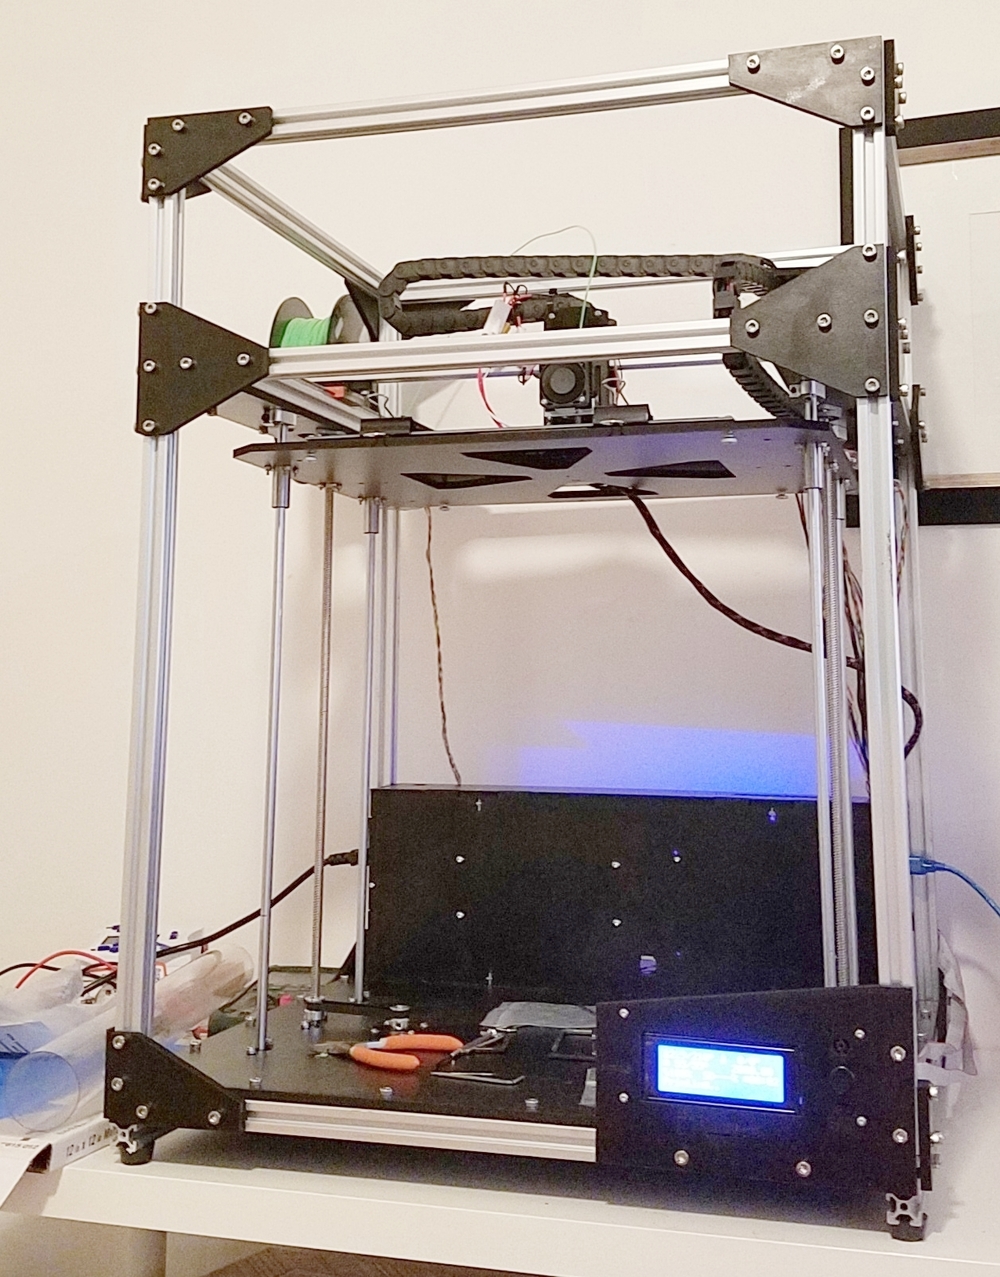 The Folgertech FT-5 Large 3D Printer Kit — Circuits